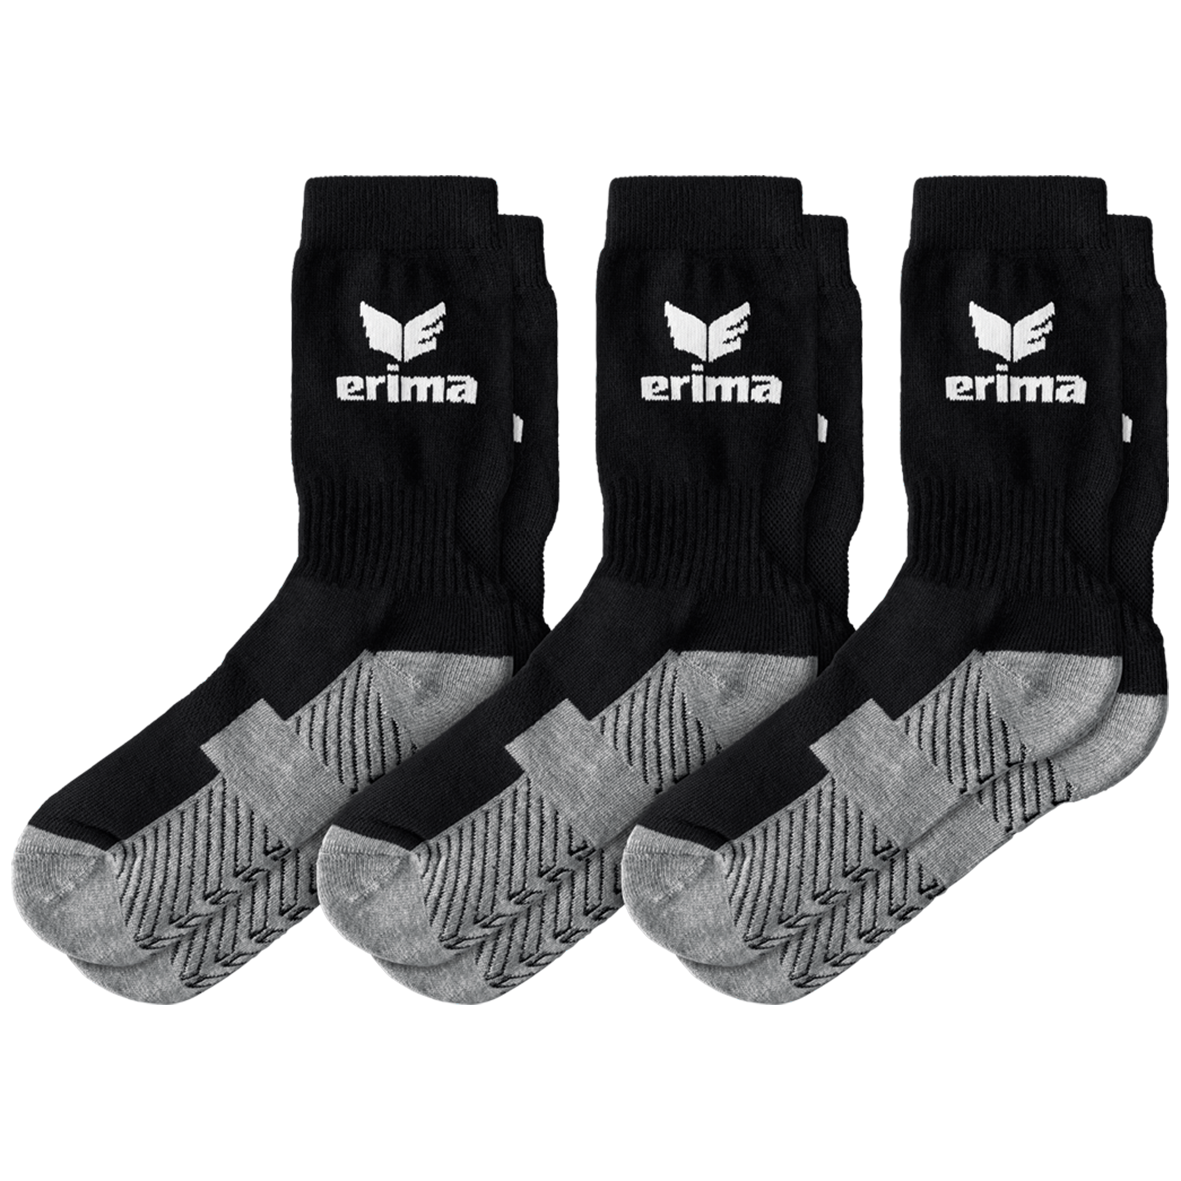 ERIMA SPORTS SOCKS, BLACK-WHITE (3 PAIRS).